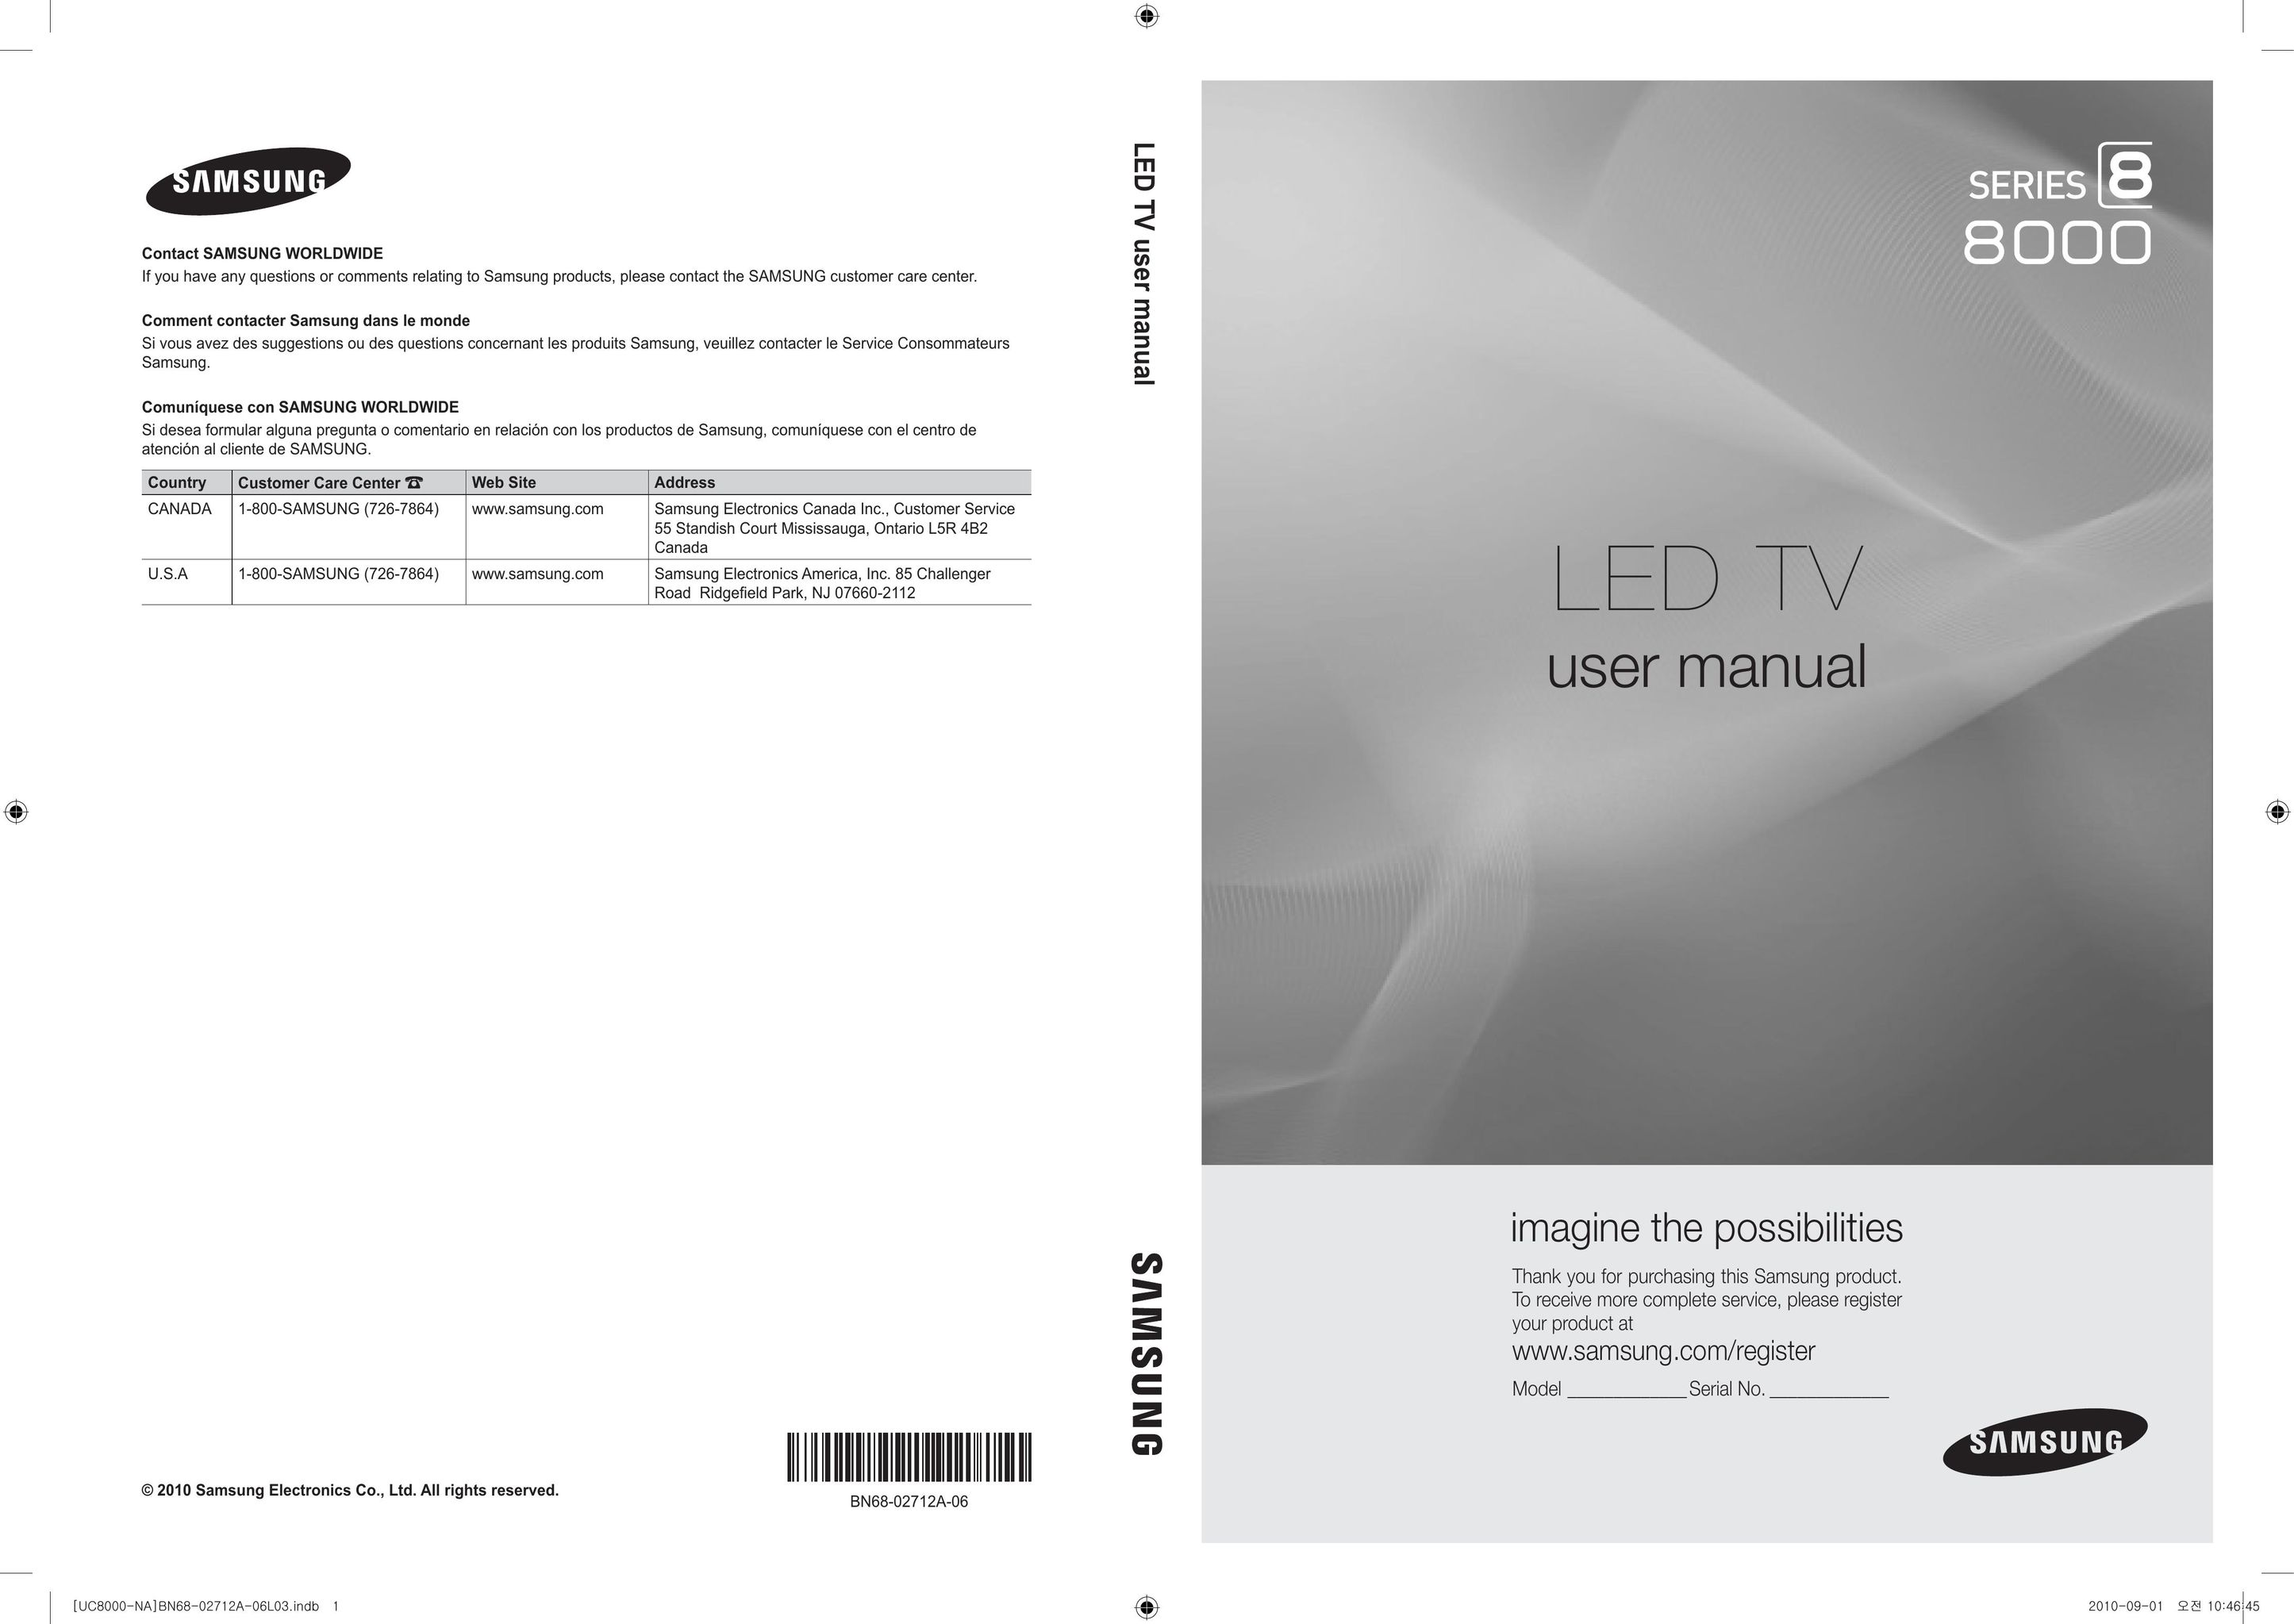 Samsung 8000 Car Satellite TV System User Manual